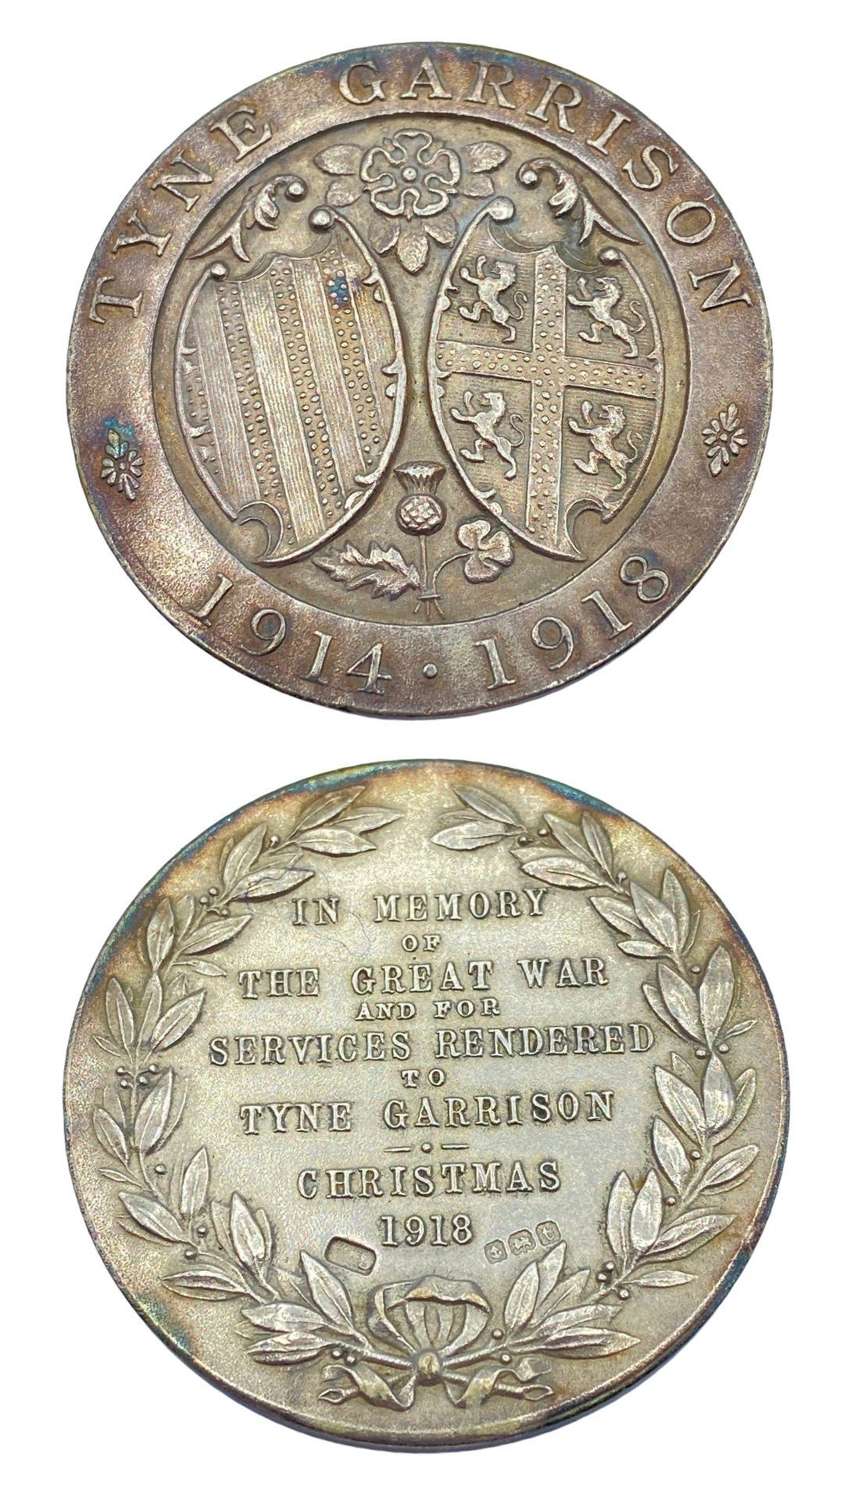 WW1 British Silver Tyne Garrison 1914-1918 Services Rendered Medal